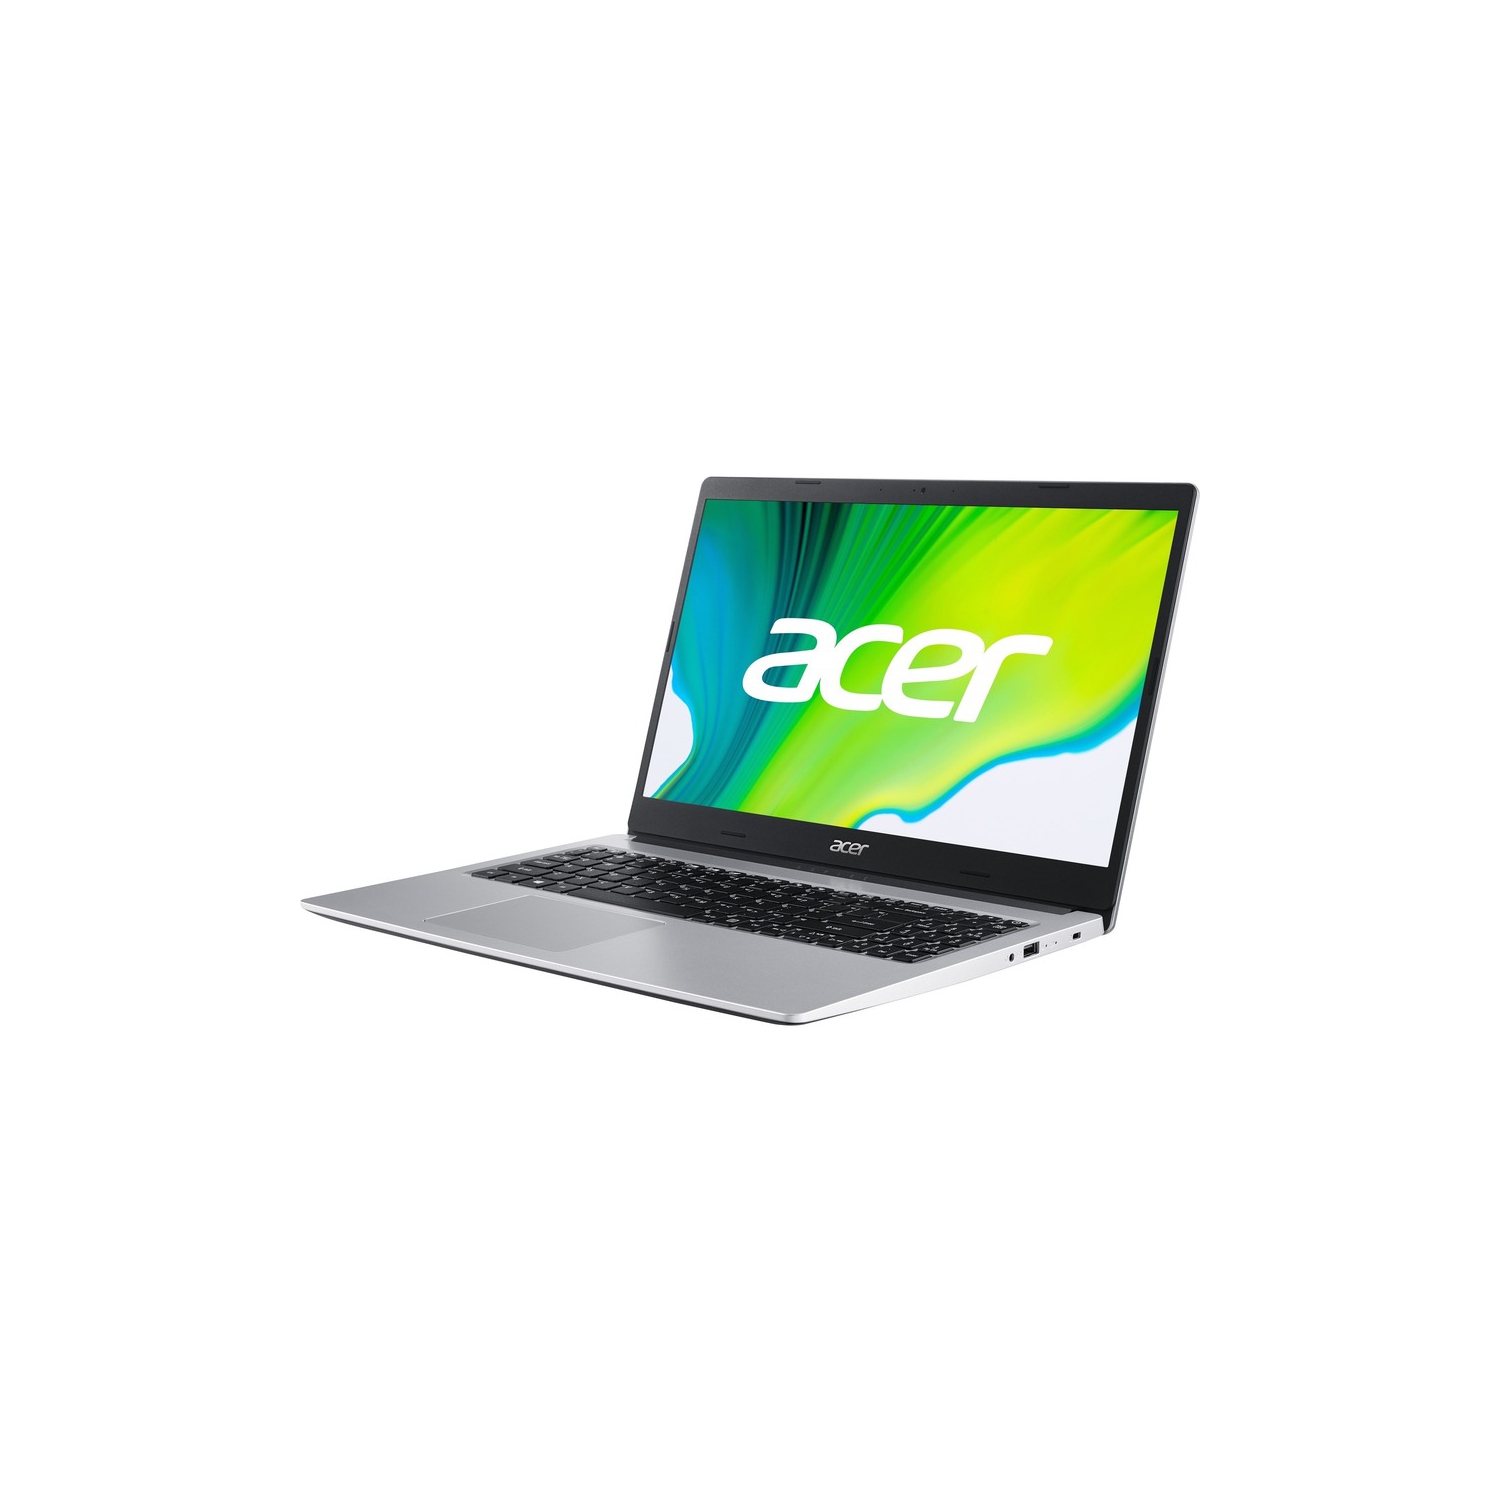 Refurbished (Excellent) - Acer Aspire 3 A315-23 15.6" Notebook AMD 5 3500U 8 GB DDR4 512 GB PCI Express Windows 10 Home 64-Bit